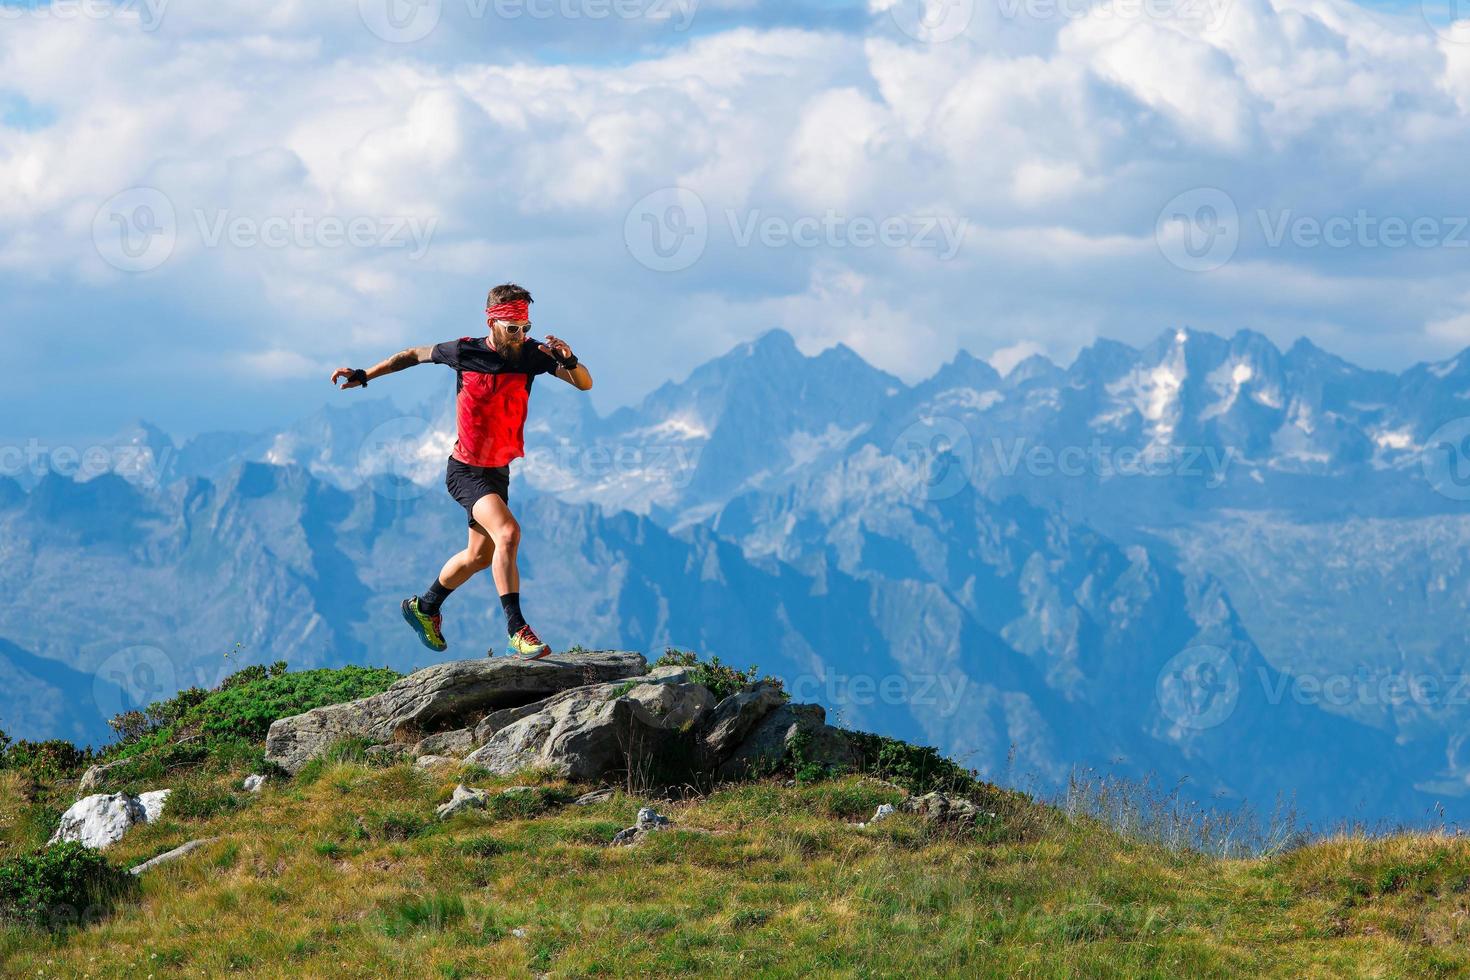 Skyrunning-Athlet im Training auf Bergkämmen foto